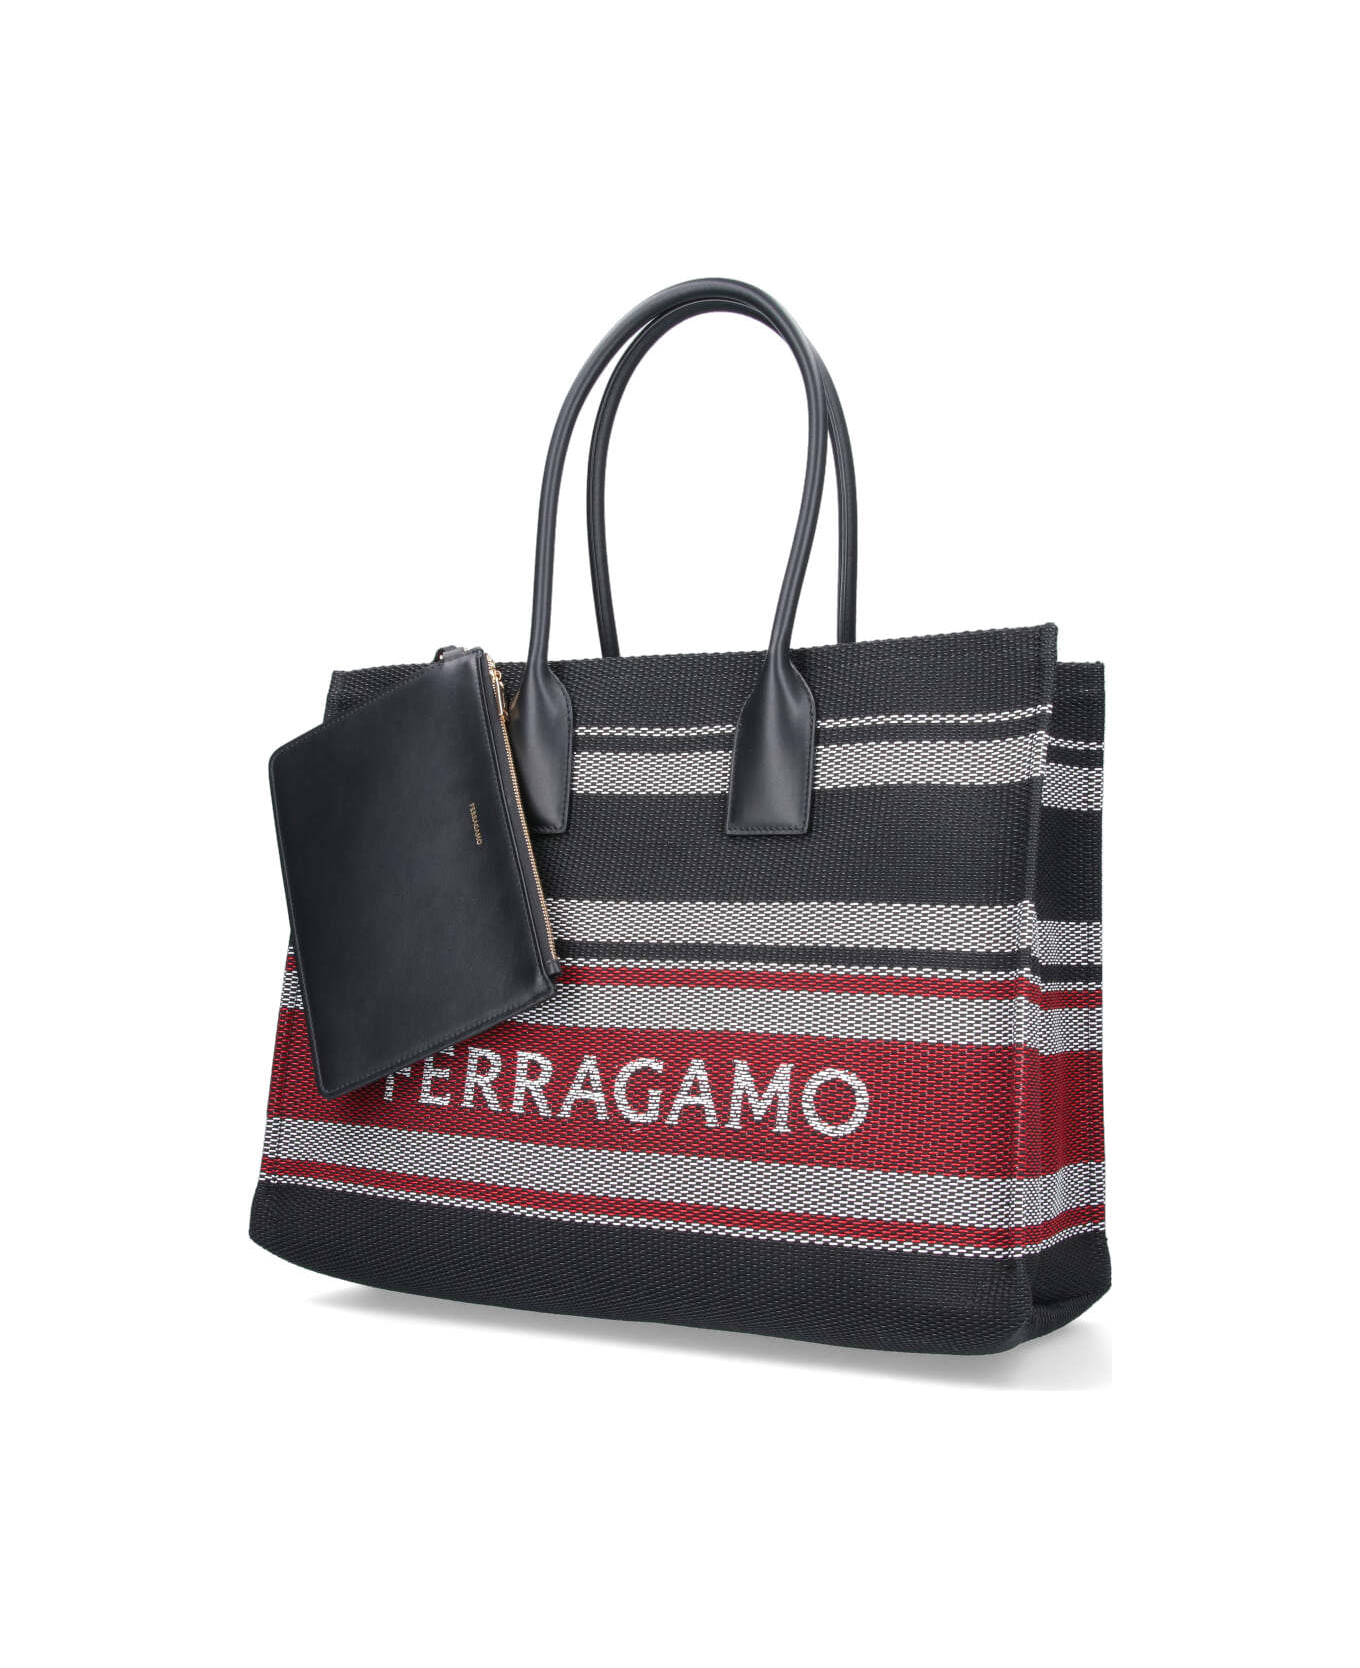 Ferragamo Logo Tote Bag - Black, red バッグ